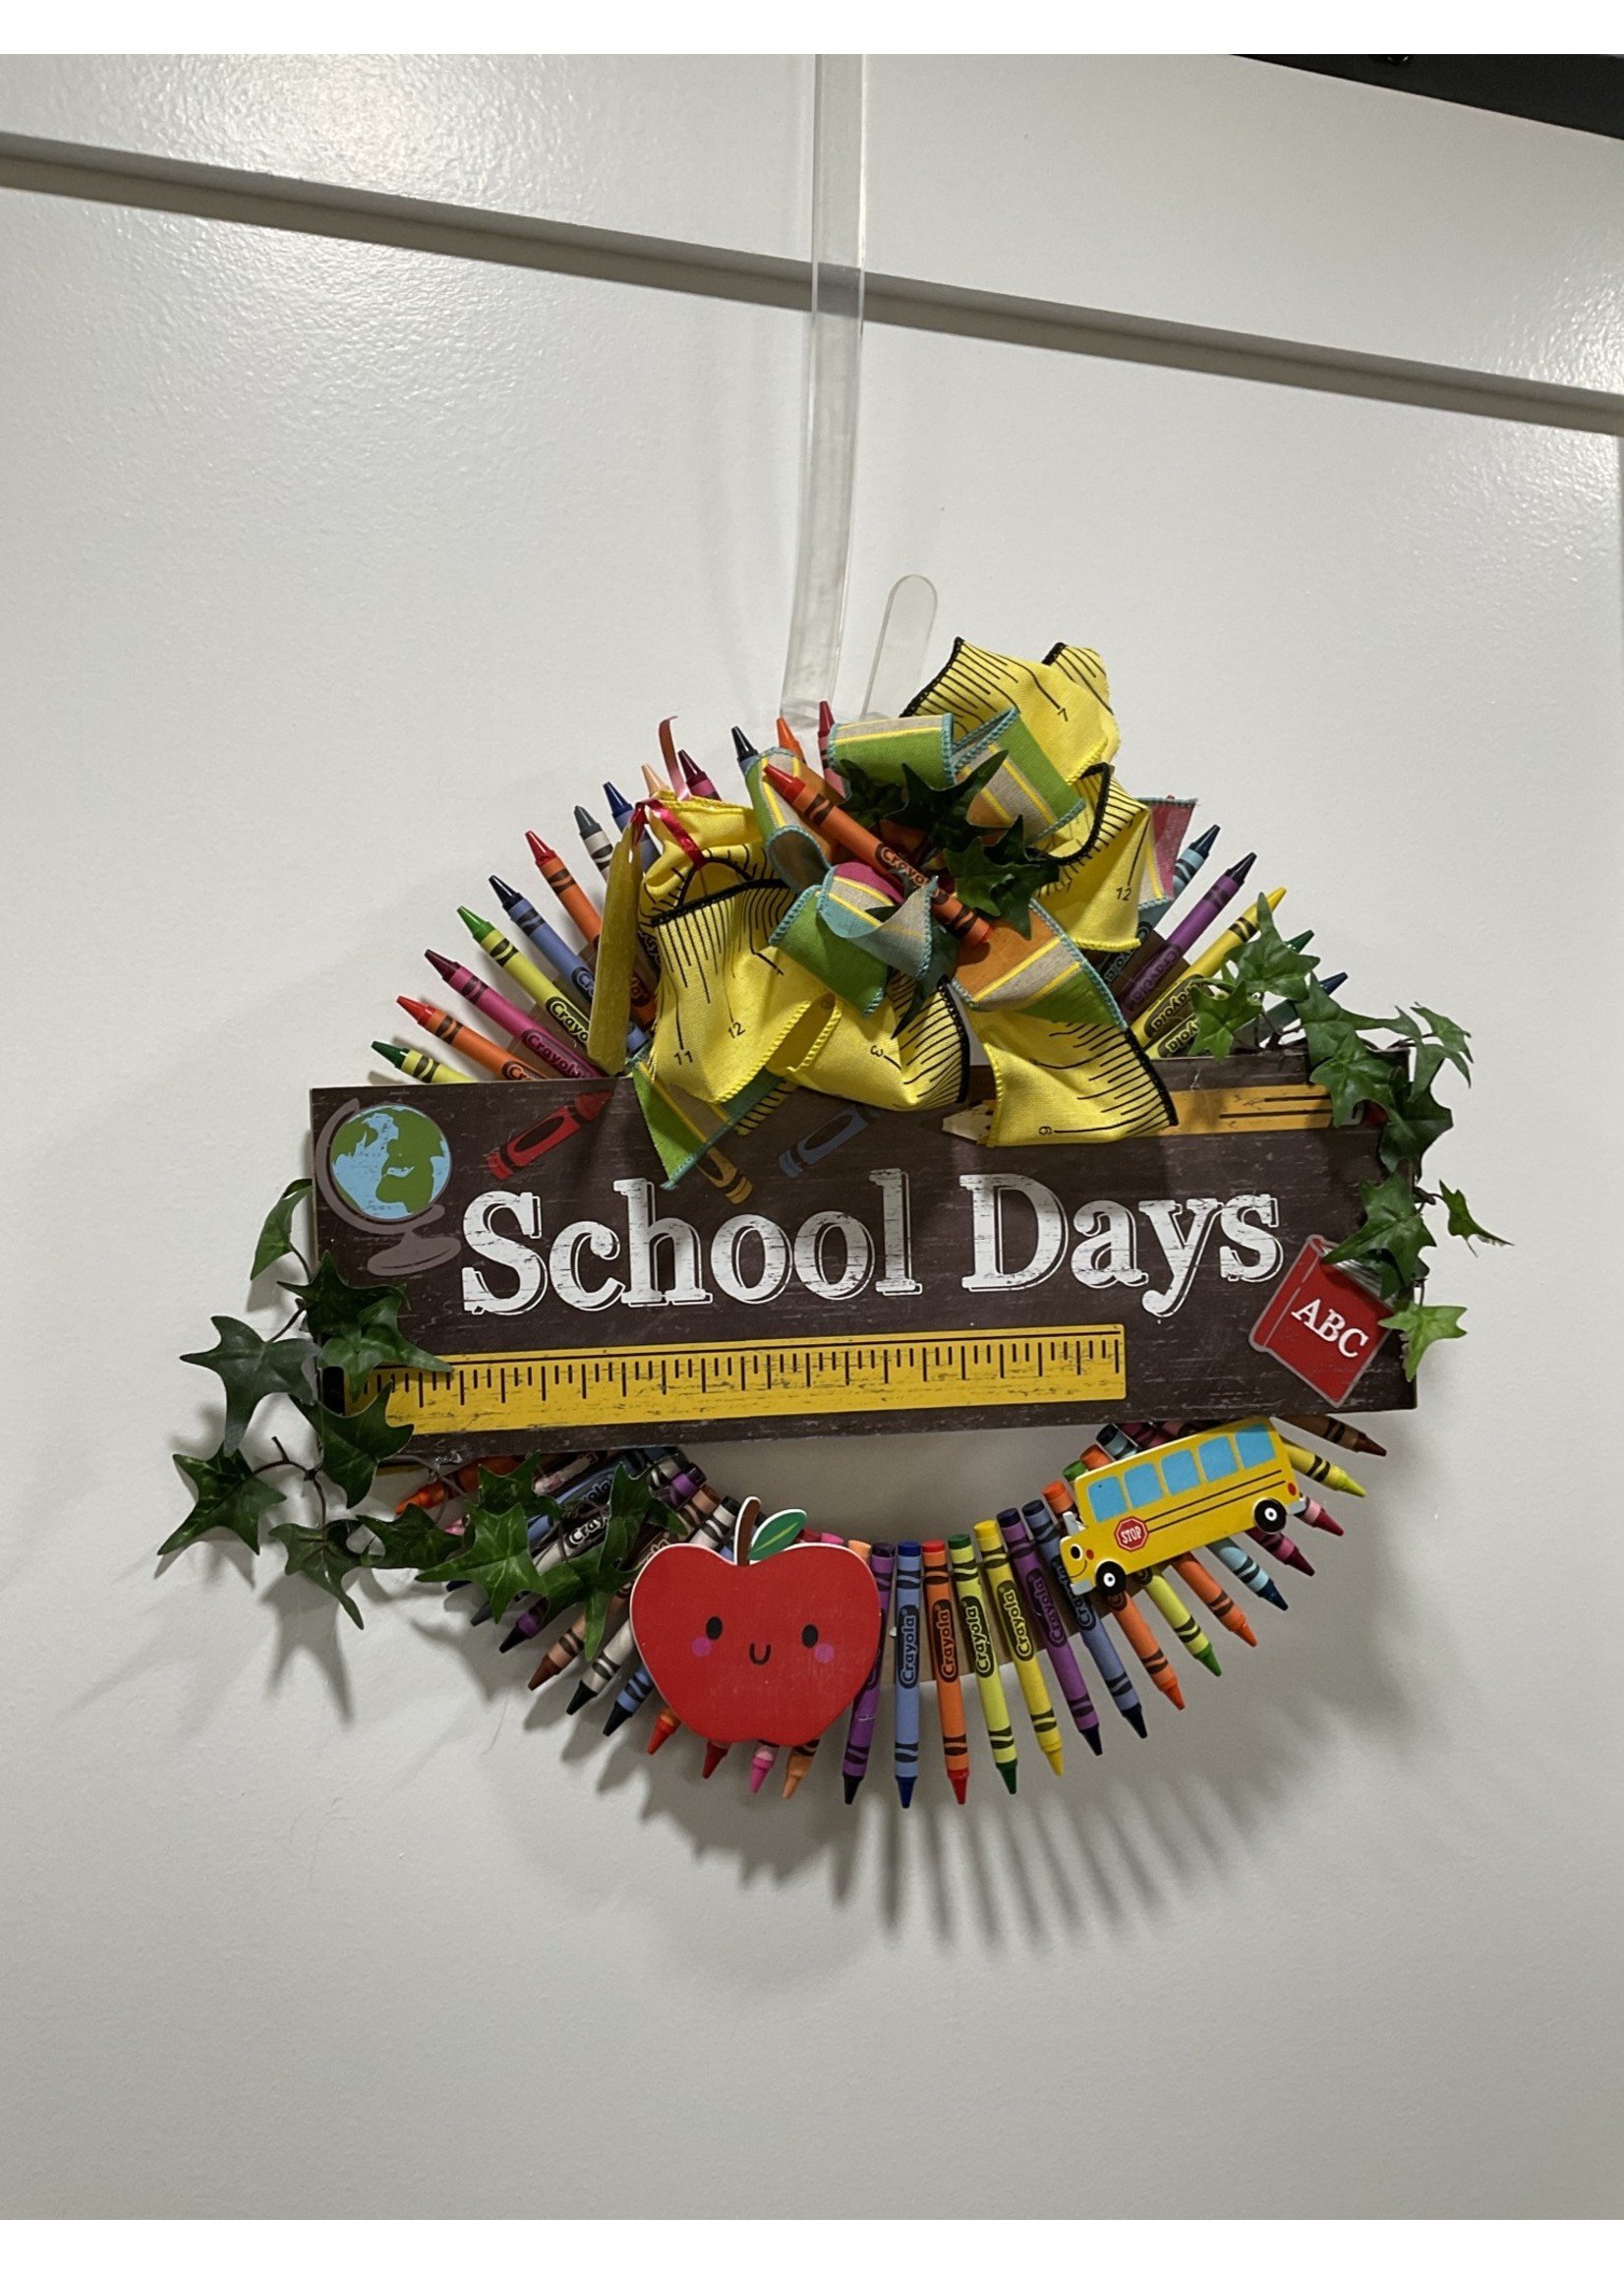 My New Favorite Thing Wreath Crayon "School Days" w/ Bus, Apple